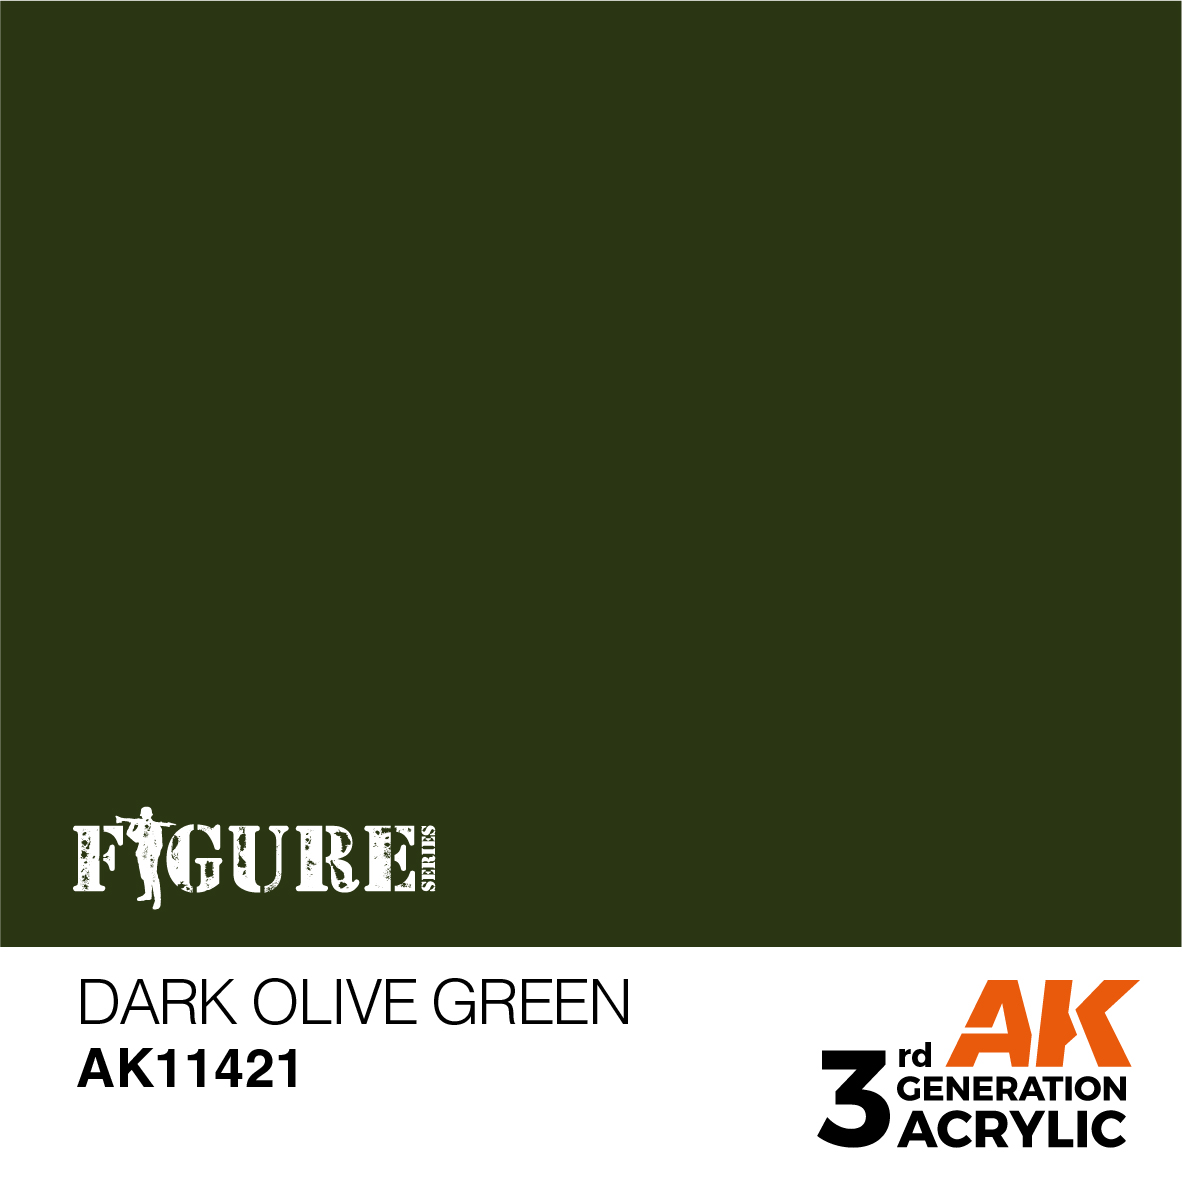 Buy DARK OLIVE GREEN - FIGURES online for 2,75€